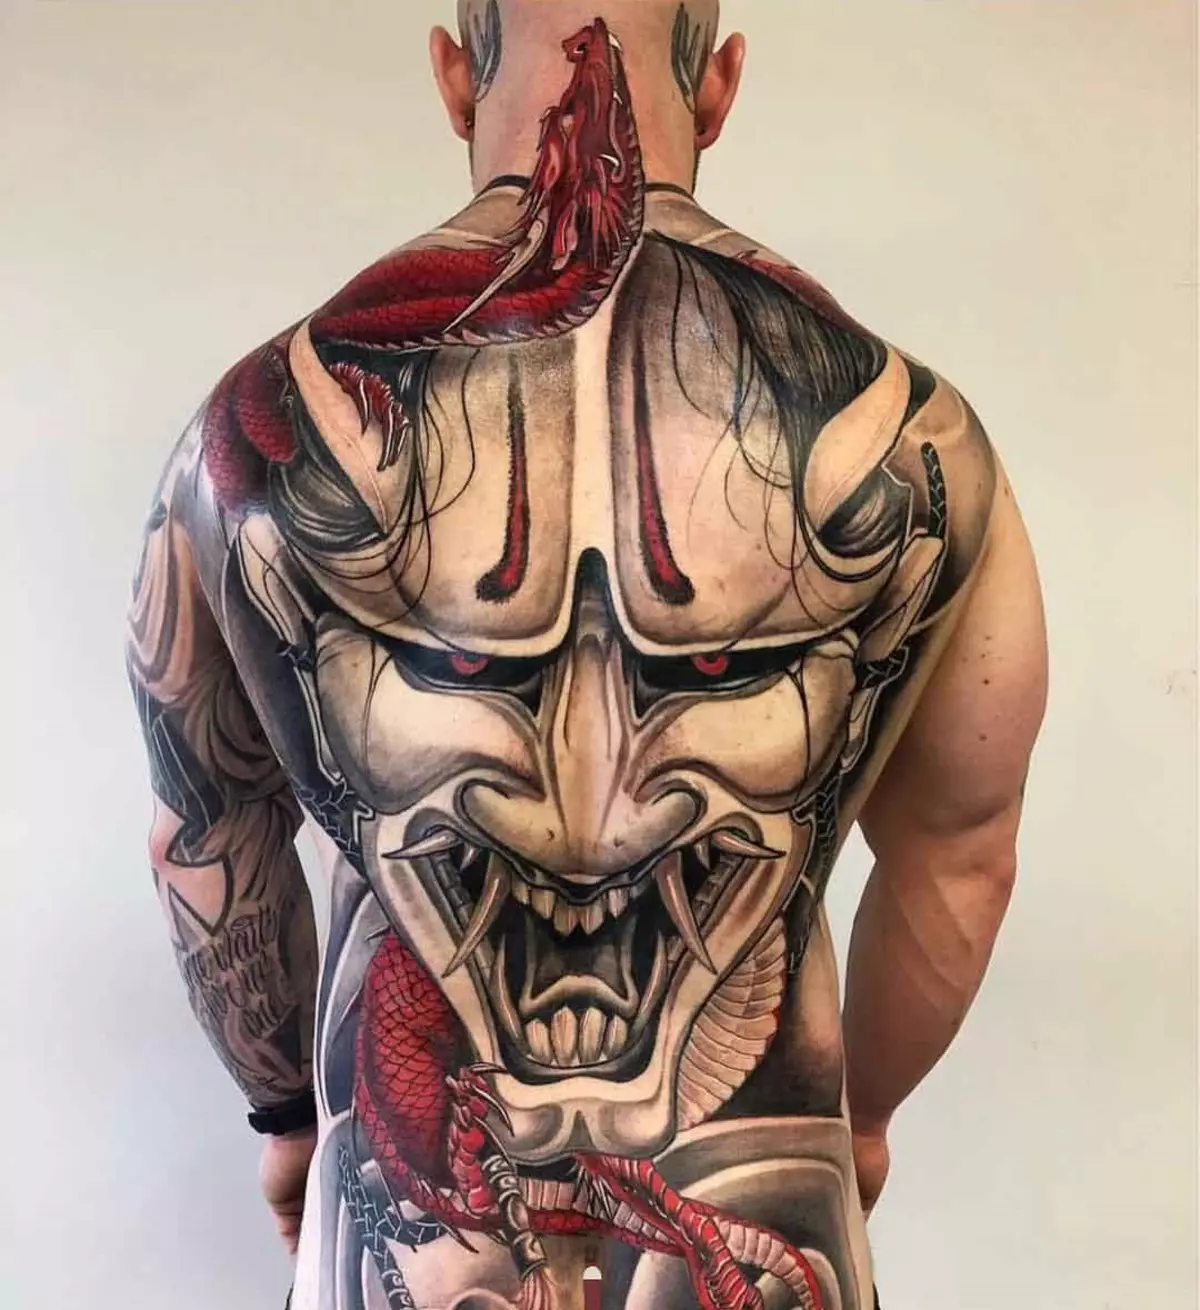 Tattoo ճապոնական դիմակների տեսքով. Դեւեր եւ դրանց իմաստները: Դաջվածքների էսքիզներ Japan ապոնիայի դիմակների ոճով: Դաջվածքի «Սատանան» ձեռքին եւ դիցաբանության այլ սարսափելի հերոսների վրա 270_24